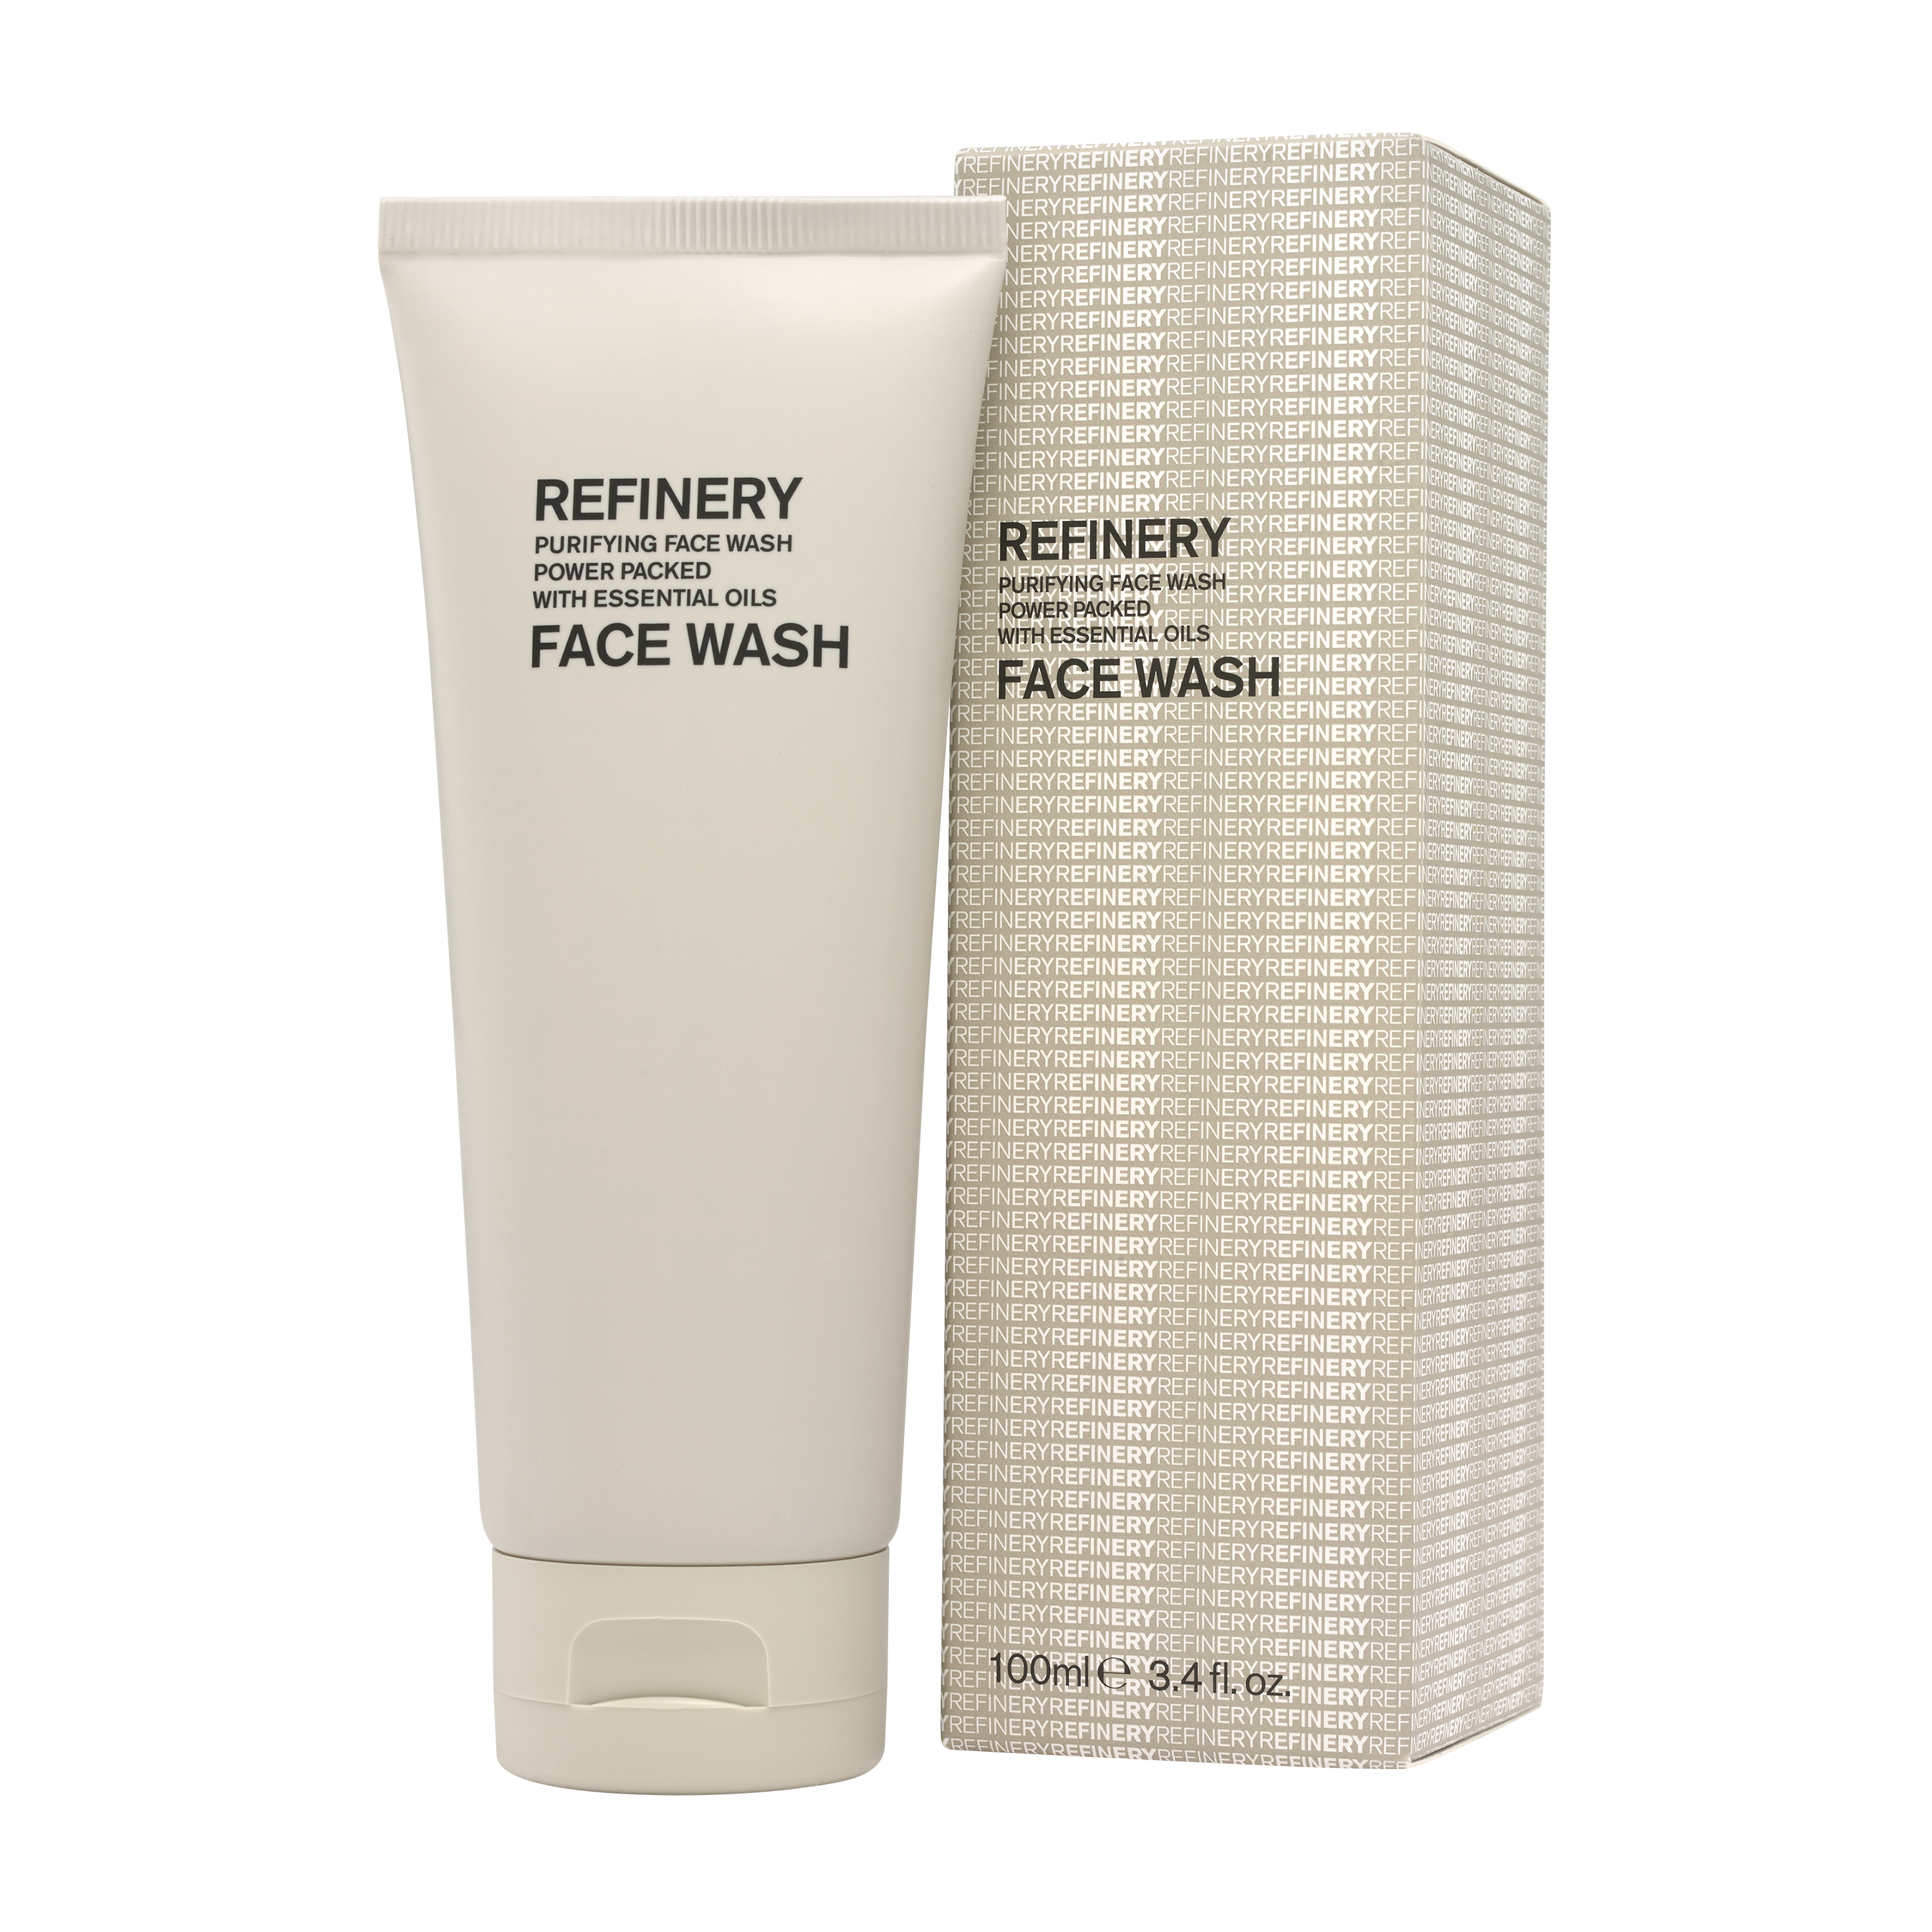 Refinery Face Wash Aromatherapy Associates